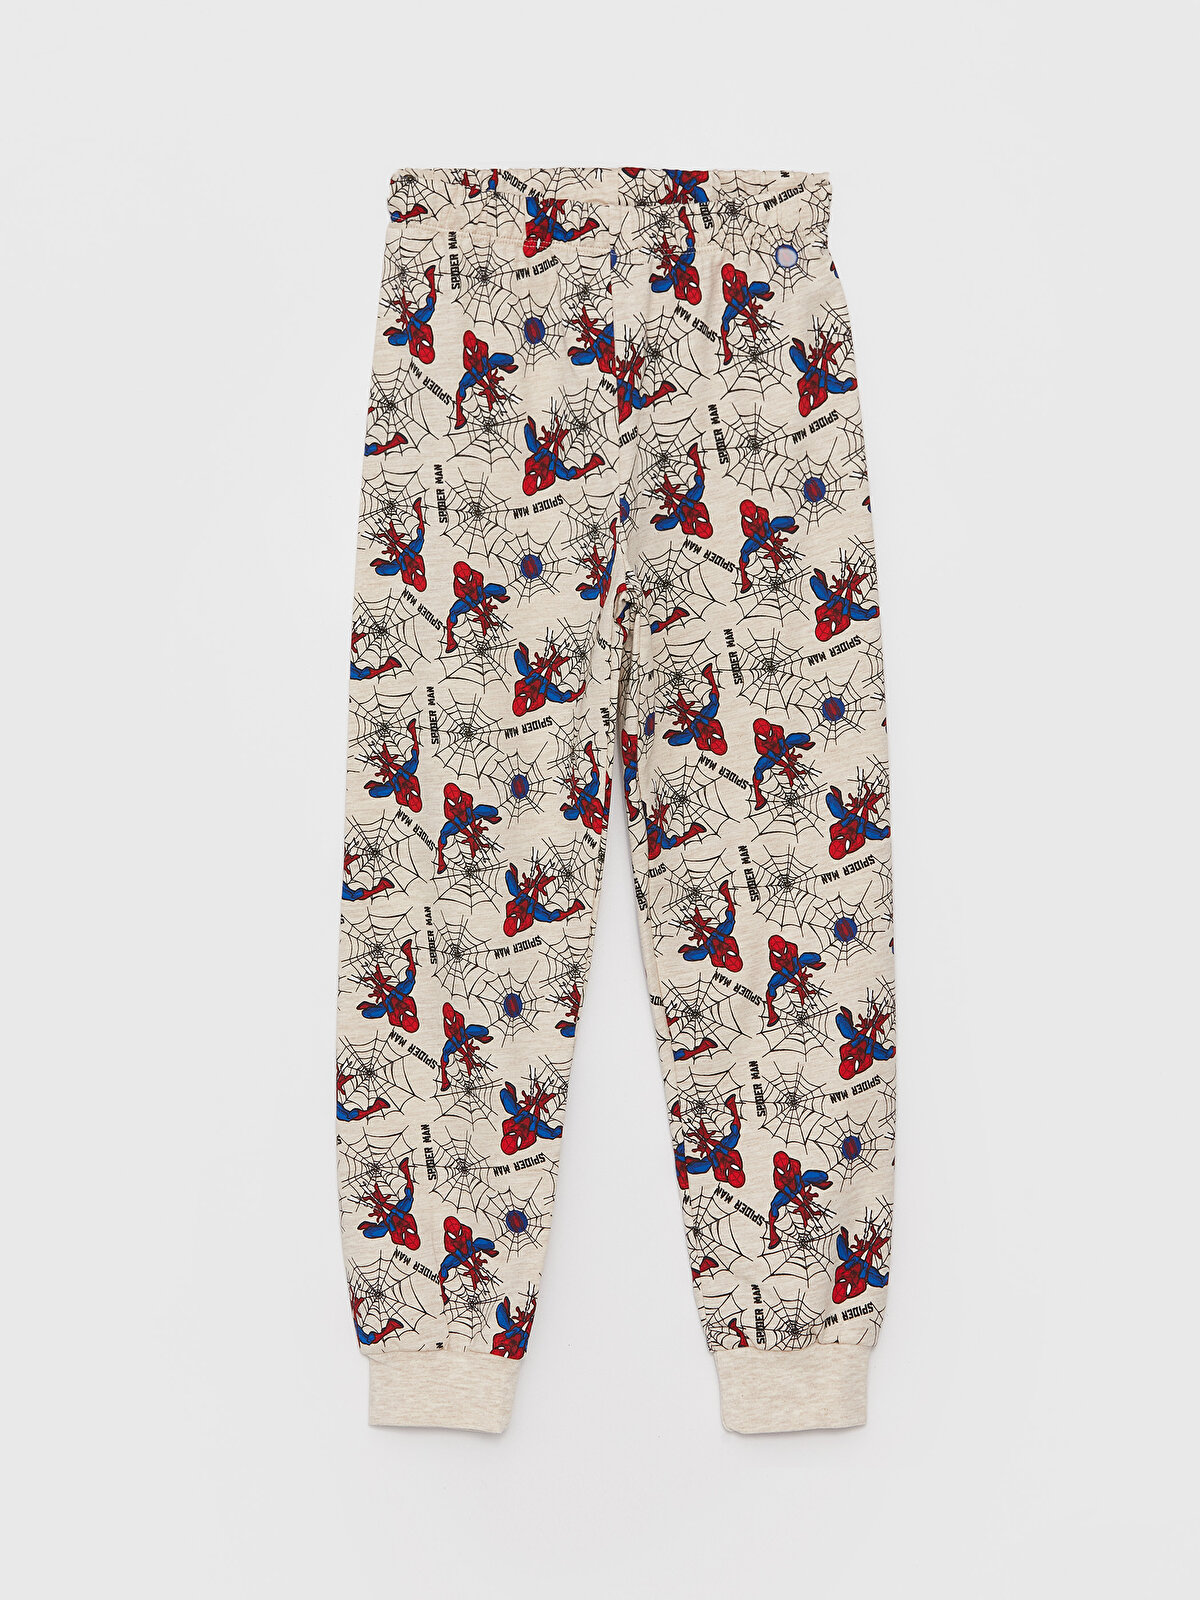 Crew Neck Spiderman Printed Long Sleeve Boy Pajama Set 